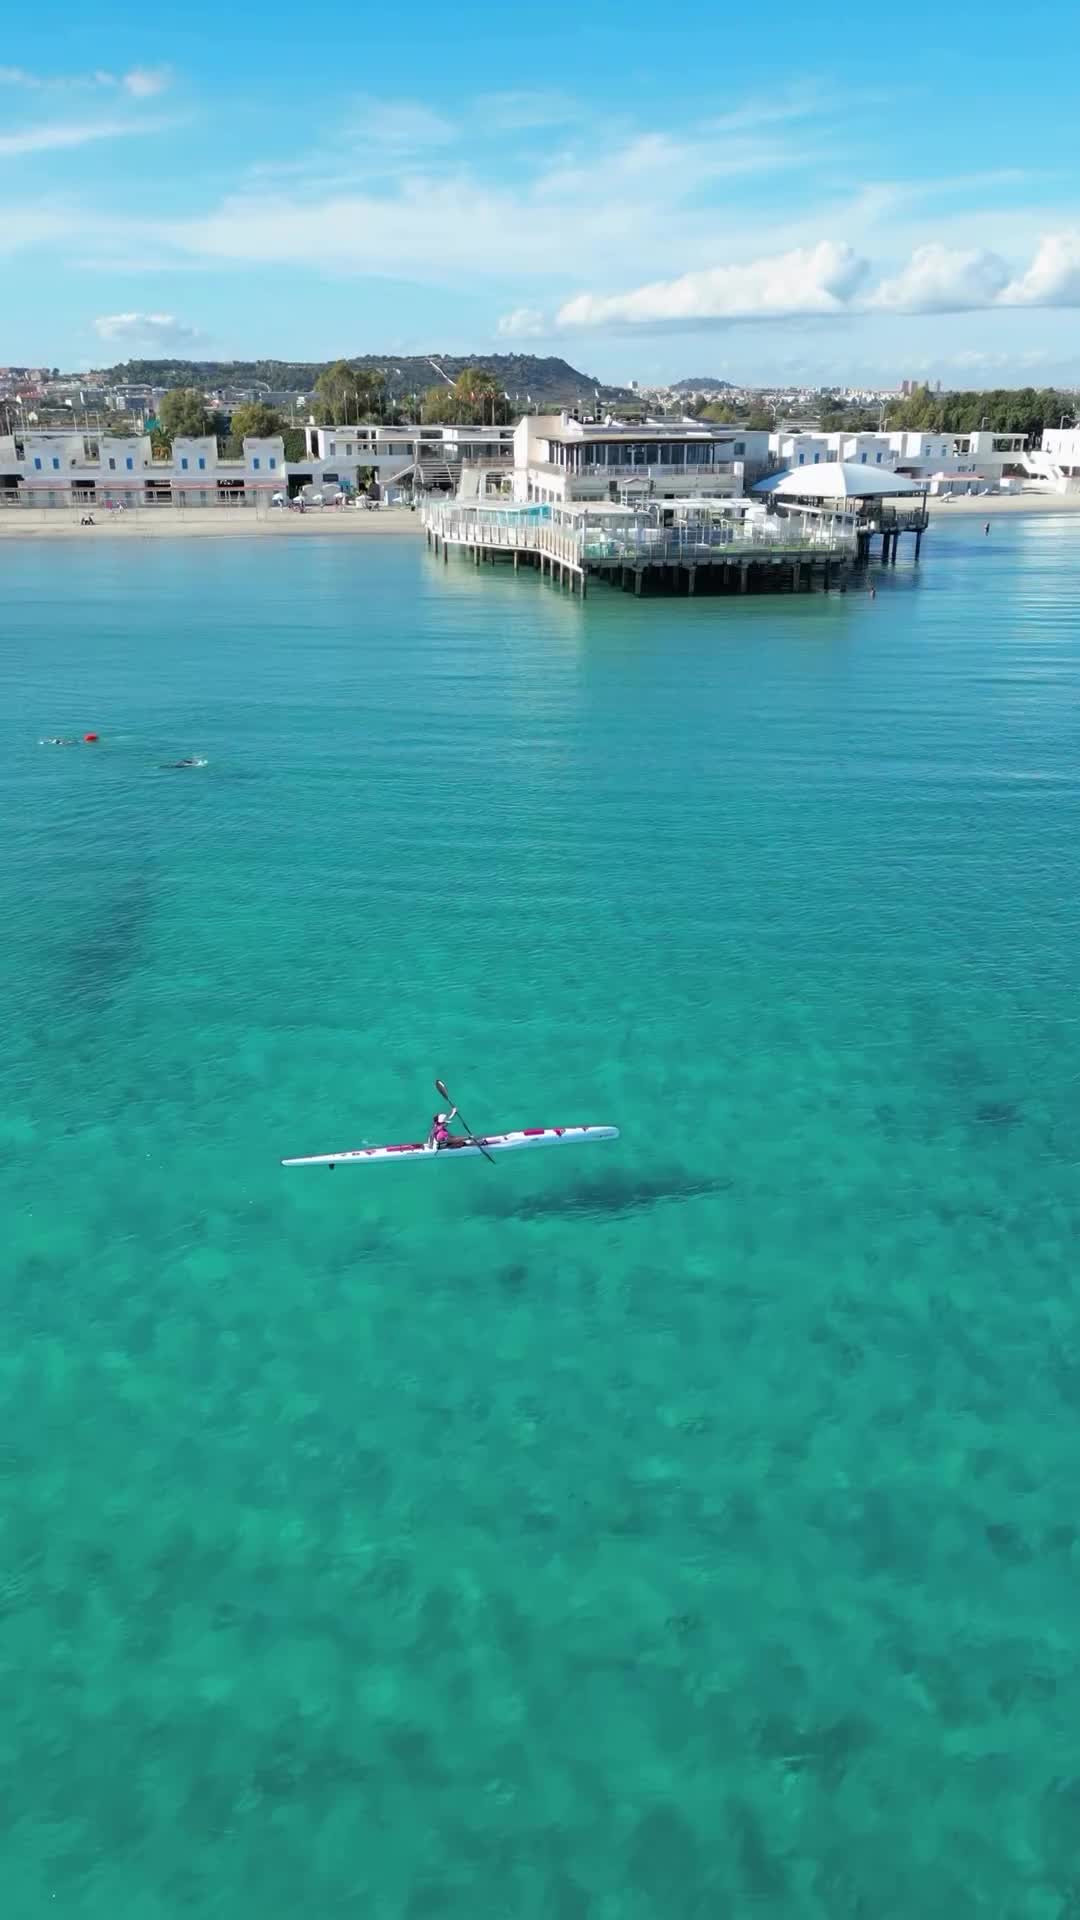 Kayaking in Crystal Clear Waters of Poetto, Sardinia